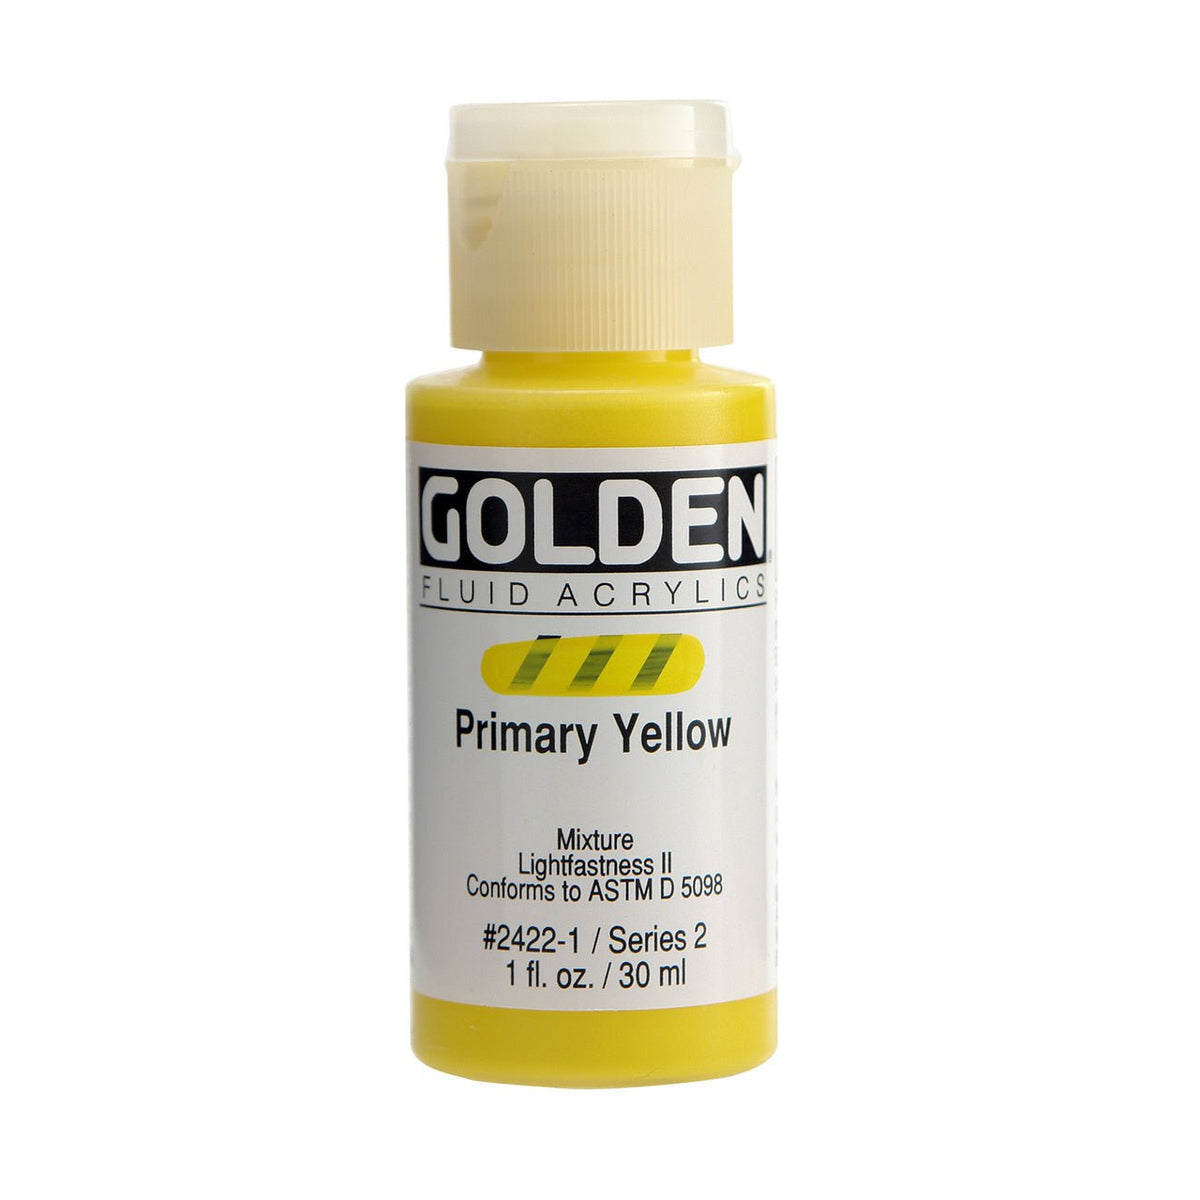 Golden Fluid Acrylic Primary Yellow 1 oz - merriartist.com